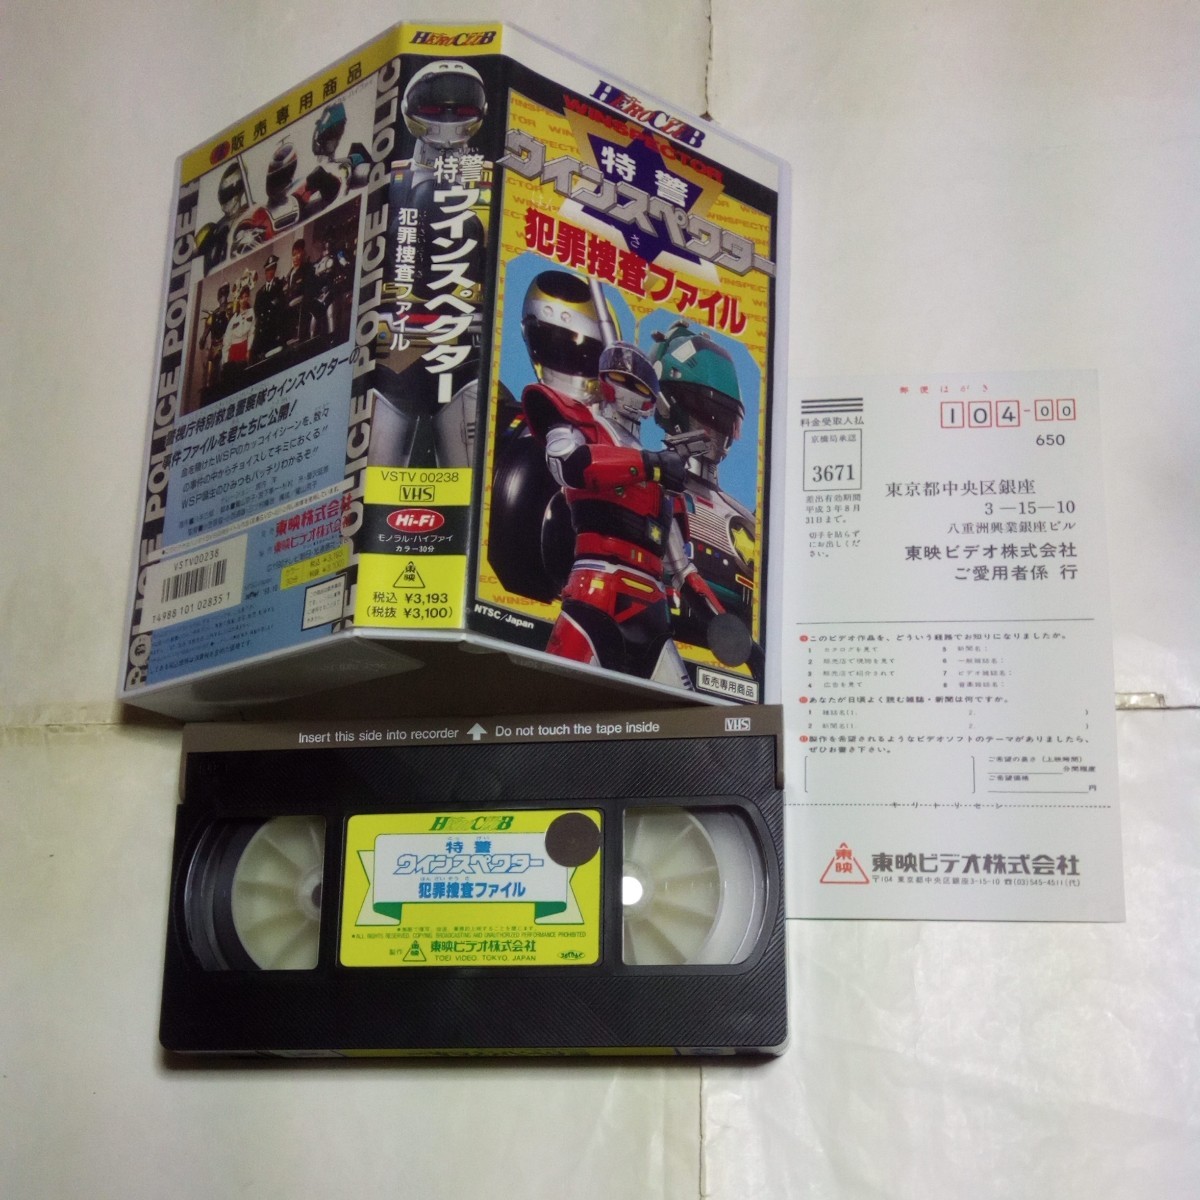 VHS видео герой Club Tokkei Winspector преступление .. файл DVD не сбор 